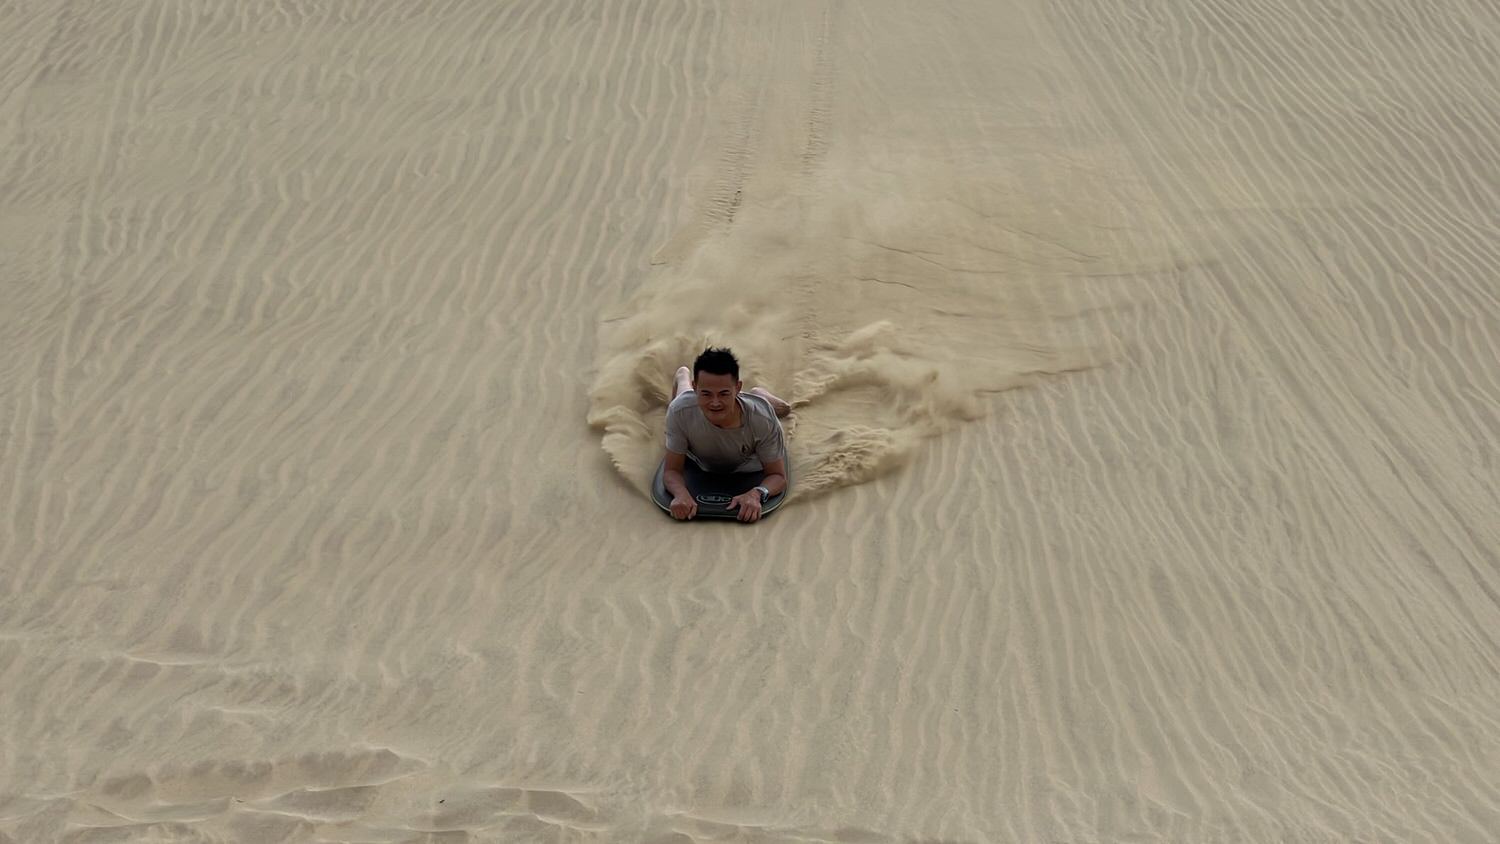 Giant Sand DunesIMG 2938